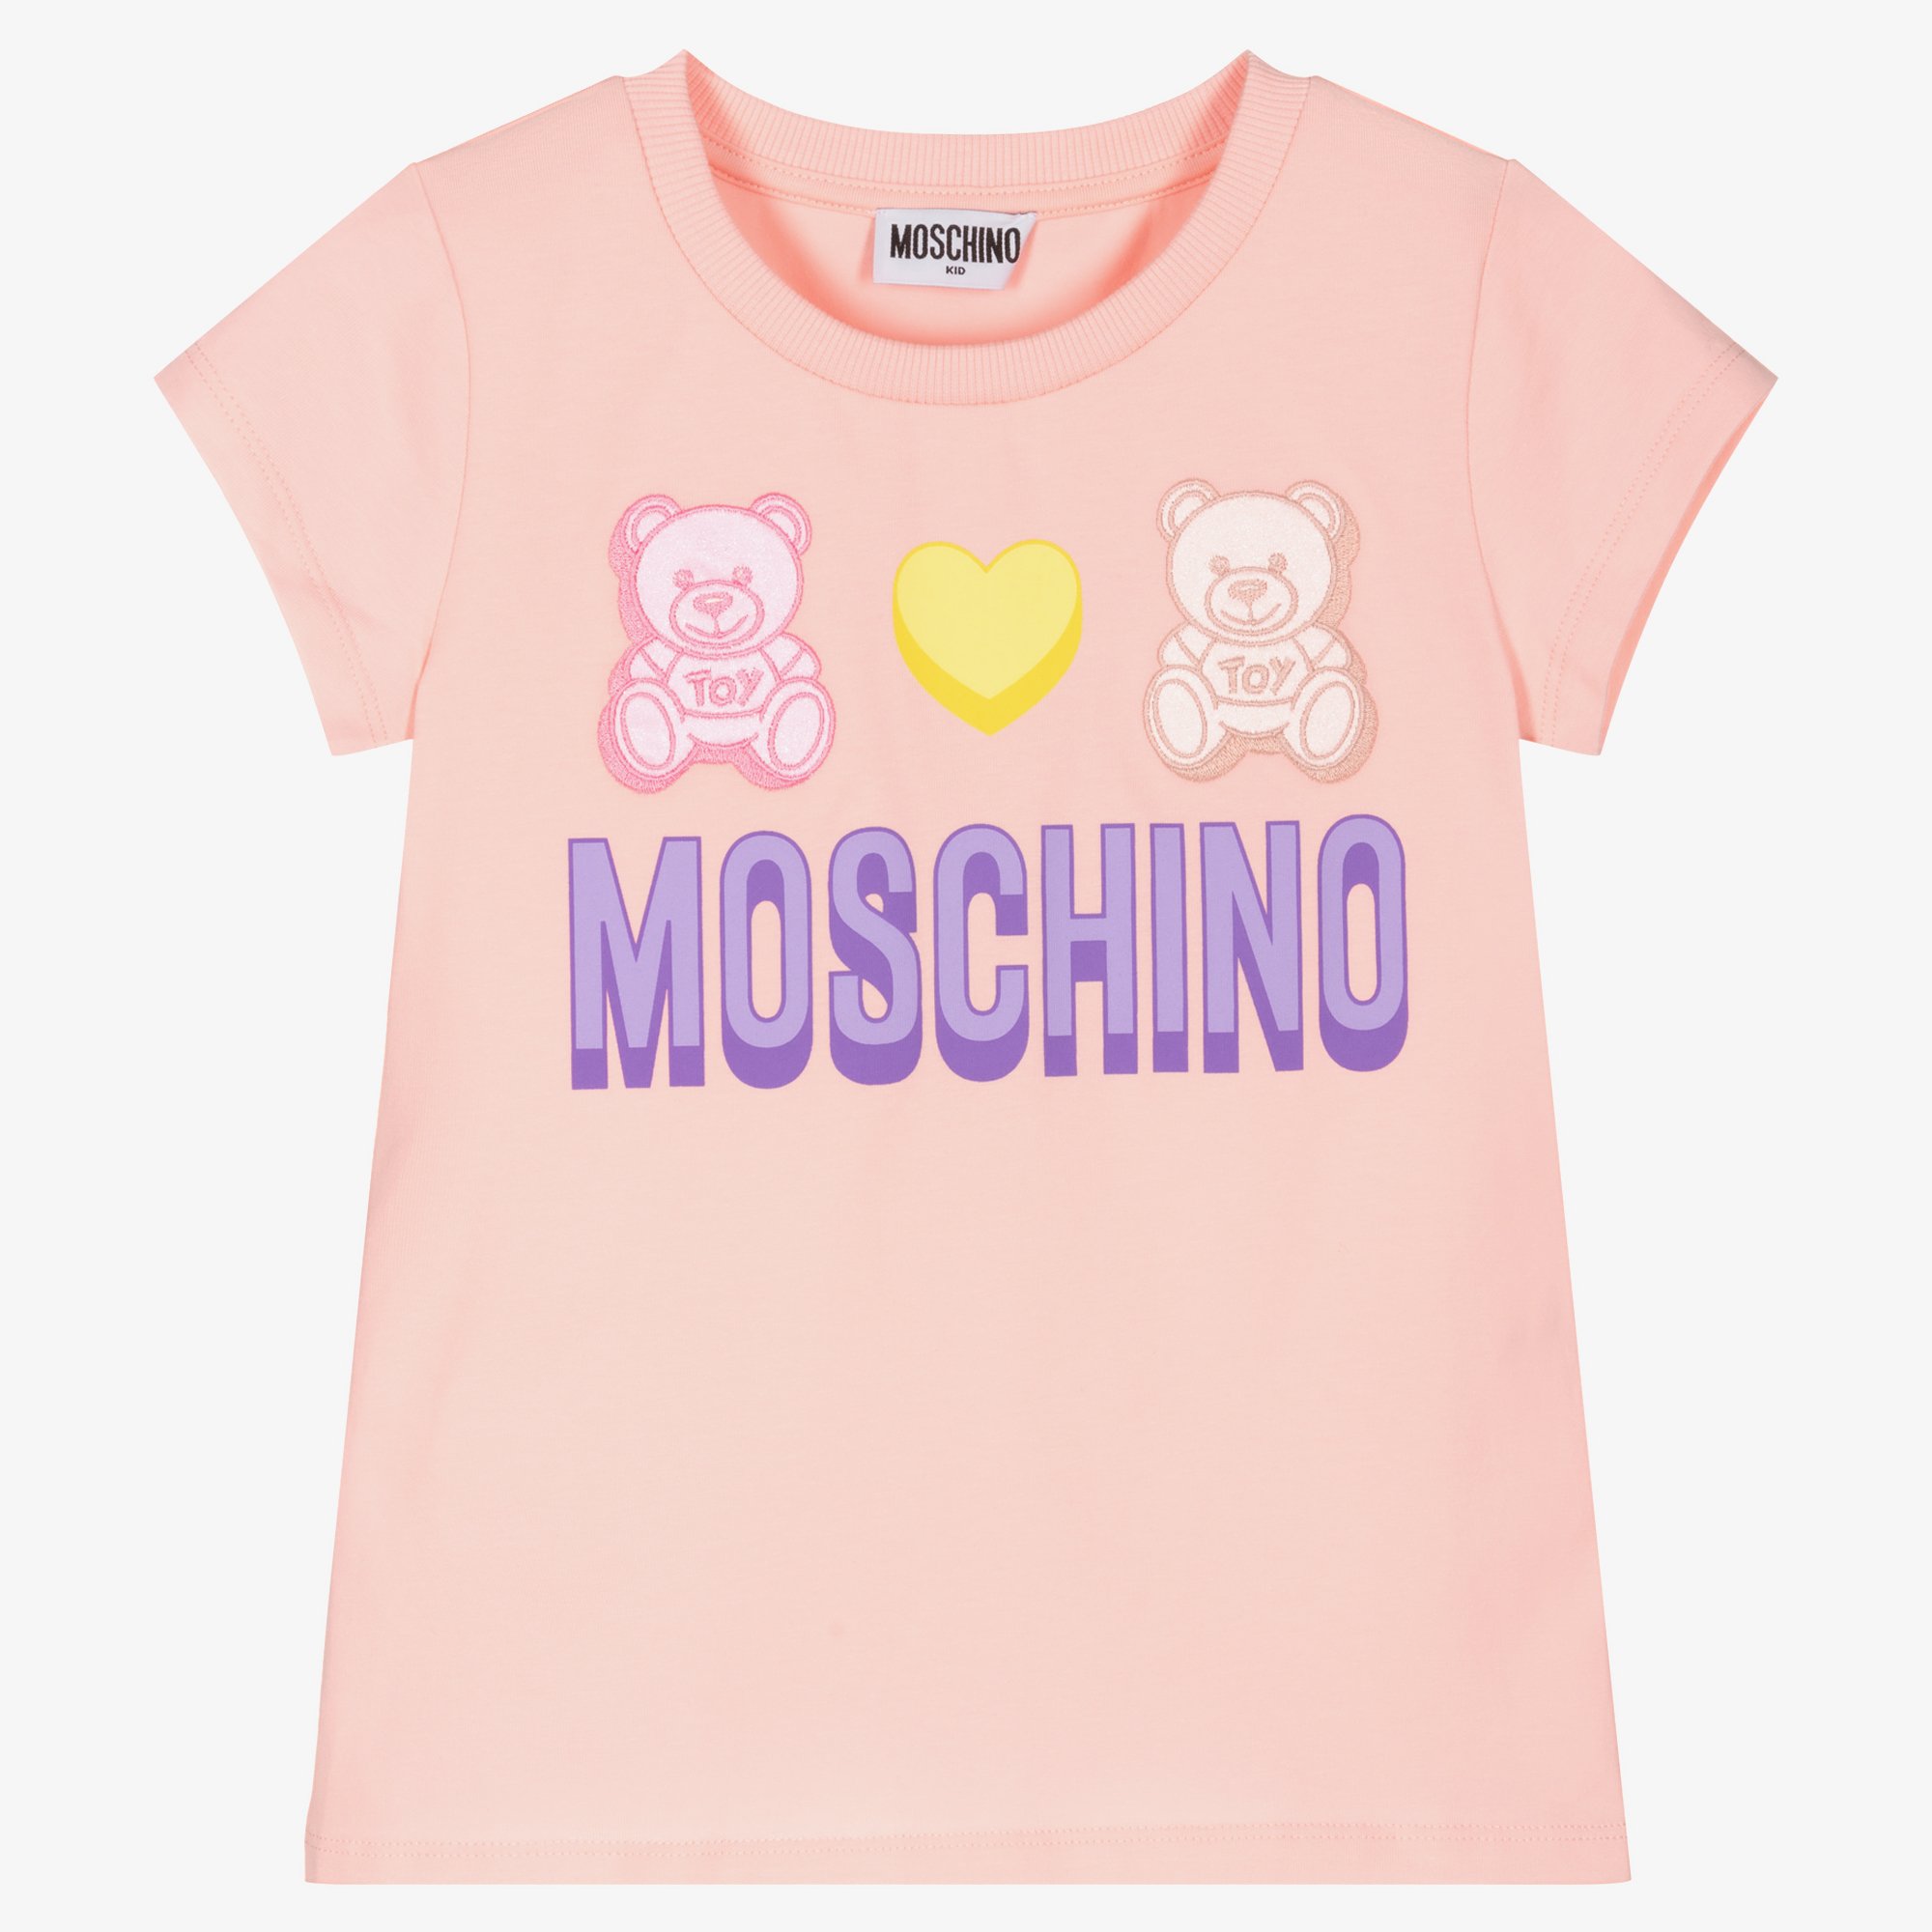 Moschino Pink Large Bear Logo T-Shirt Moschino